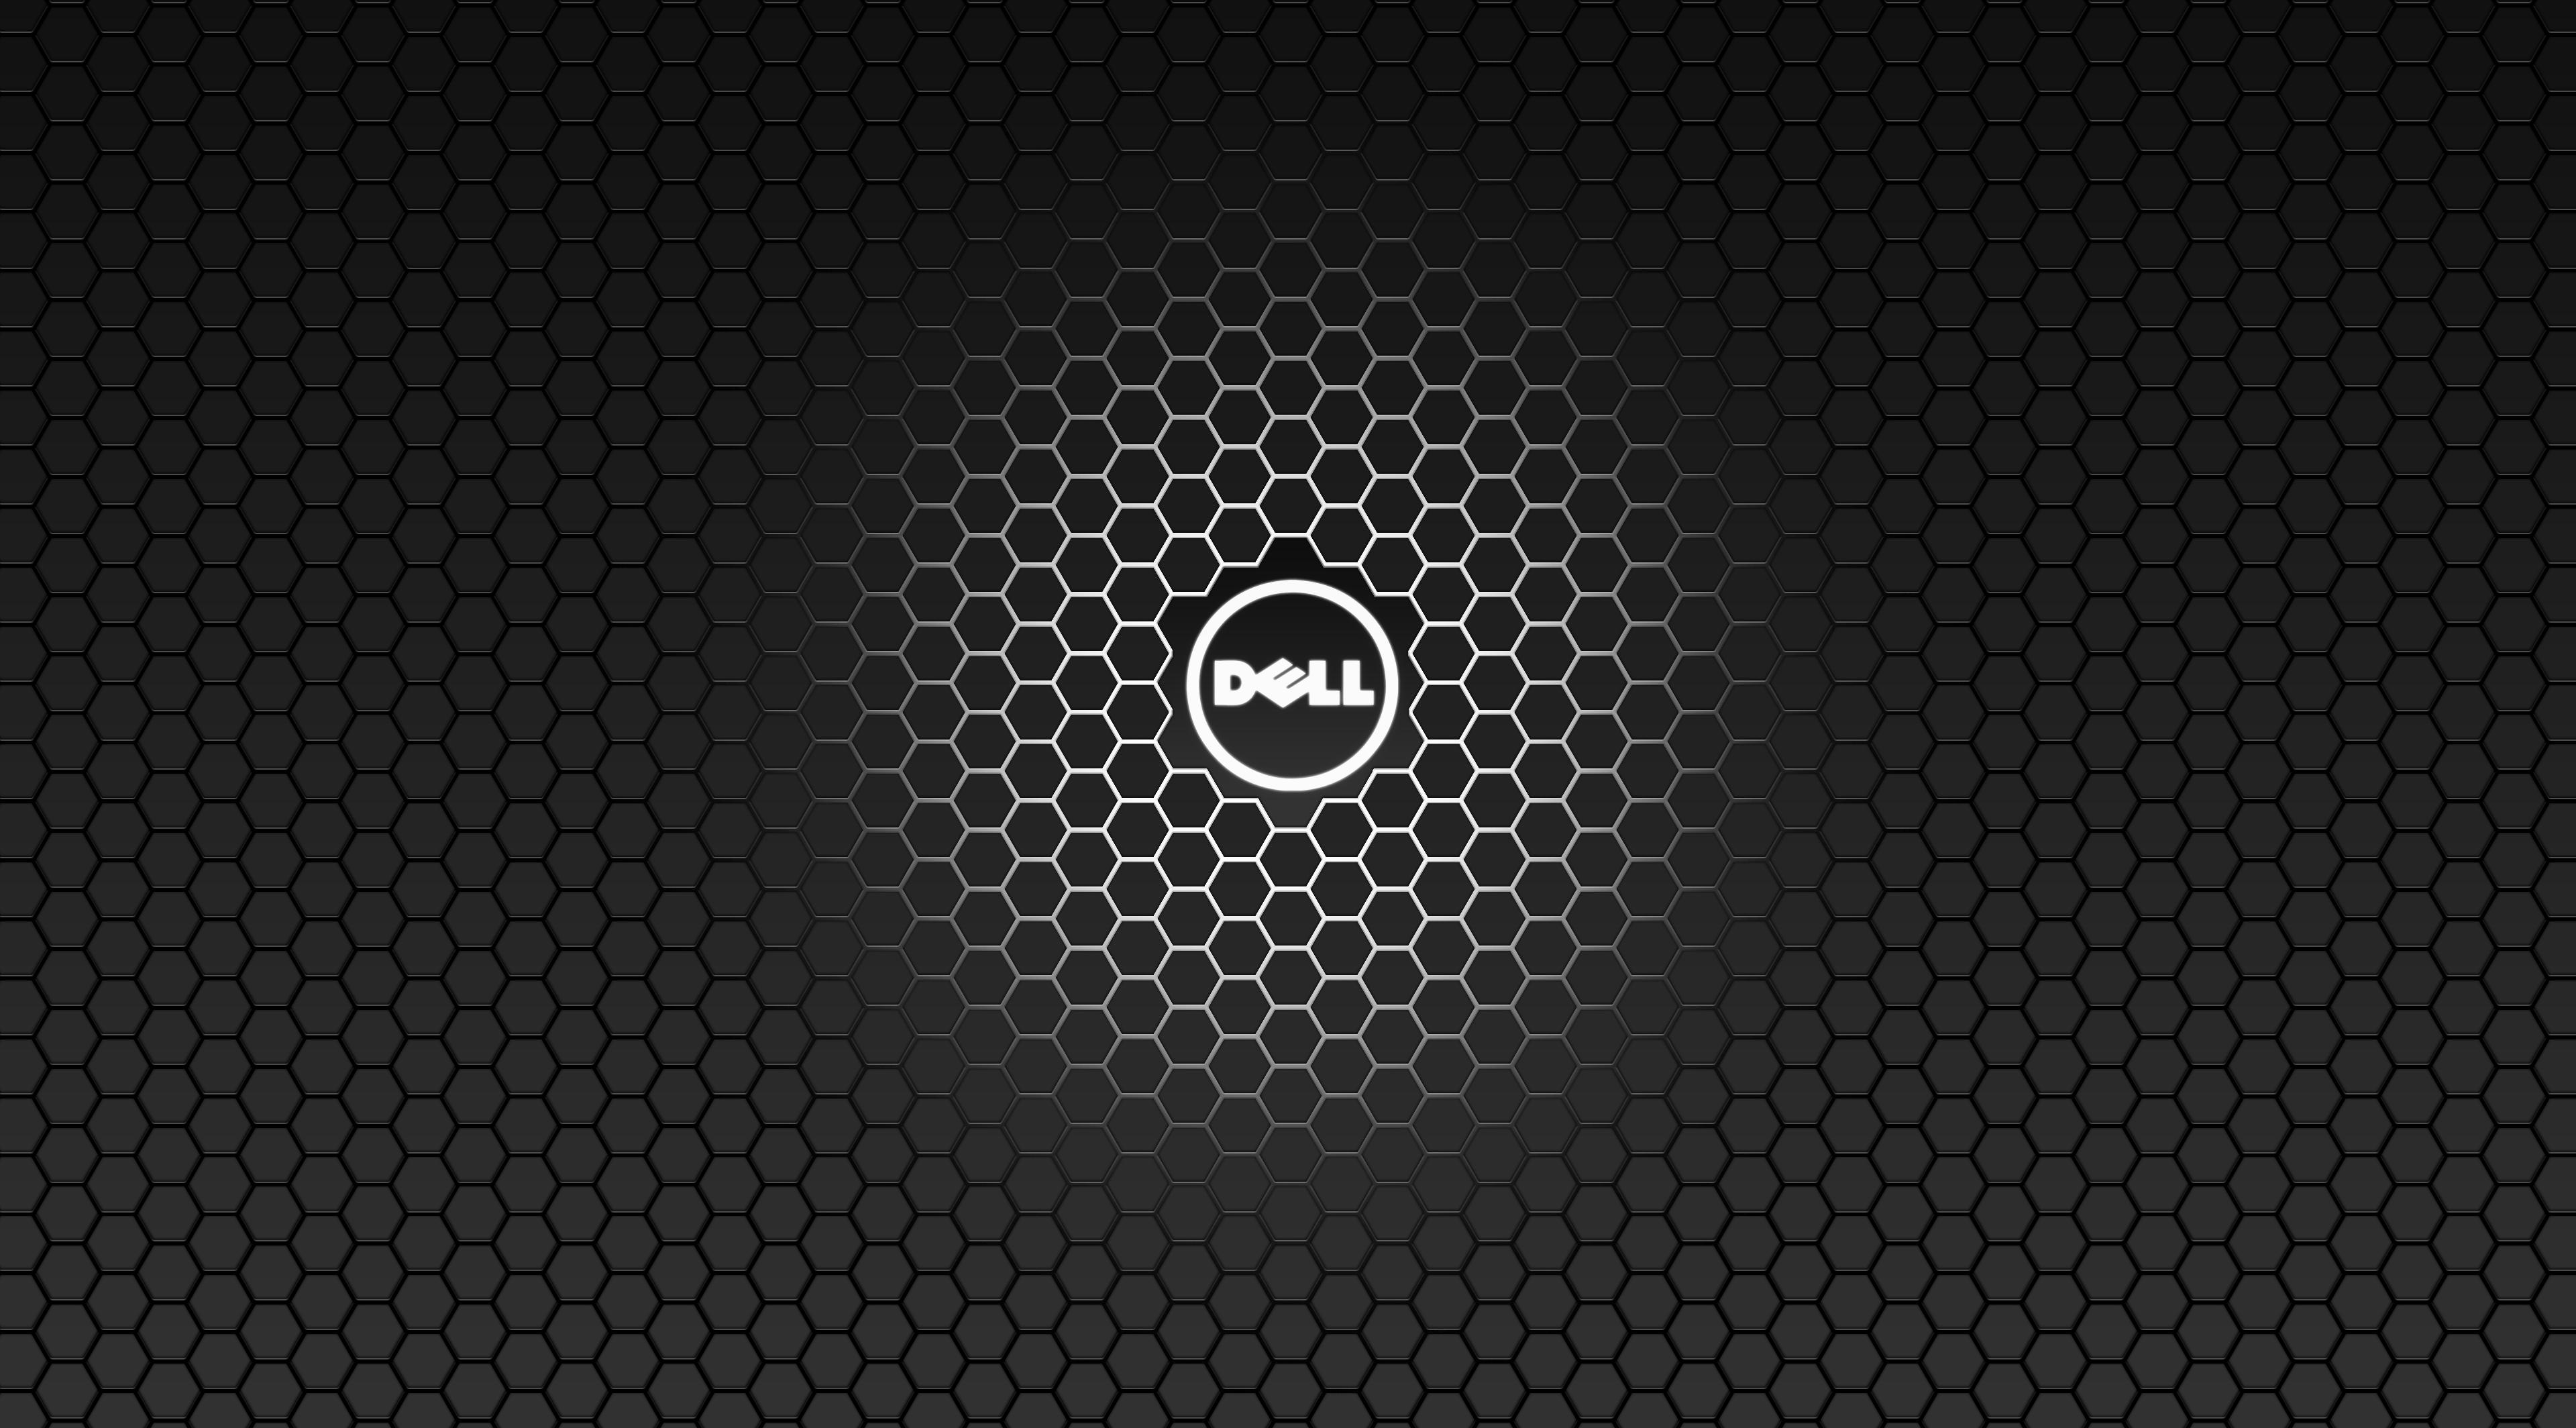 Dell Desktop Background Wallpaper. HD Wallpaper